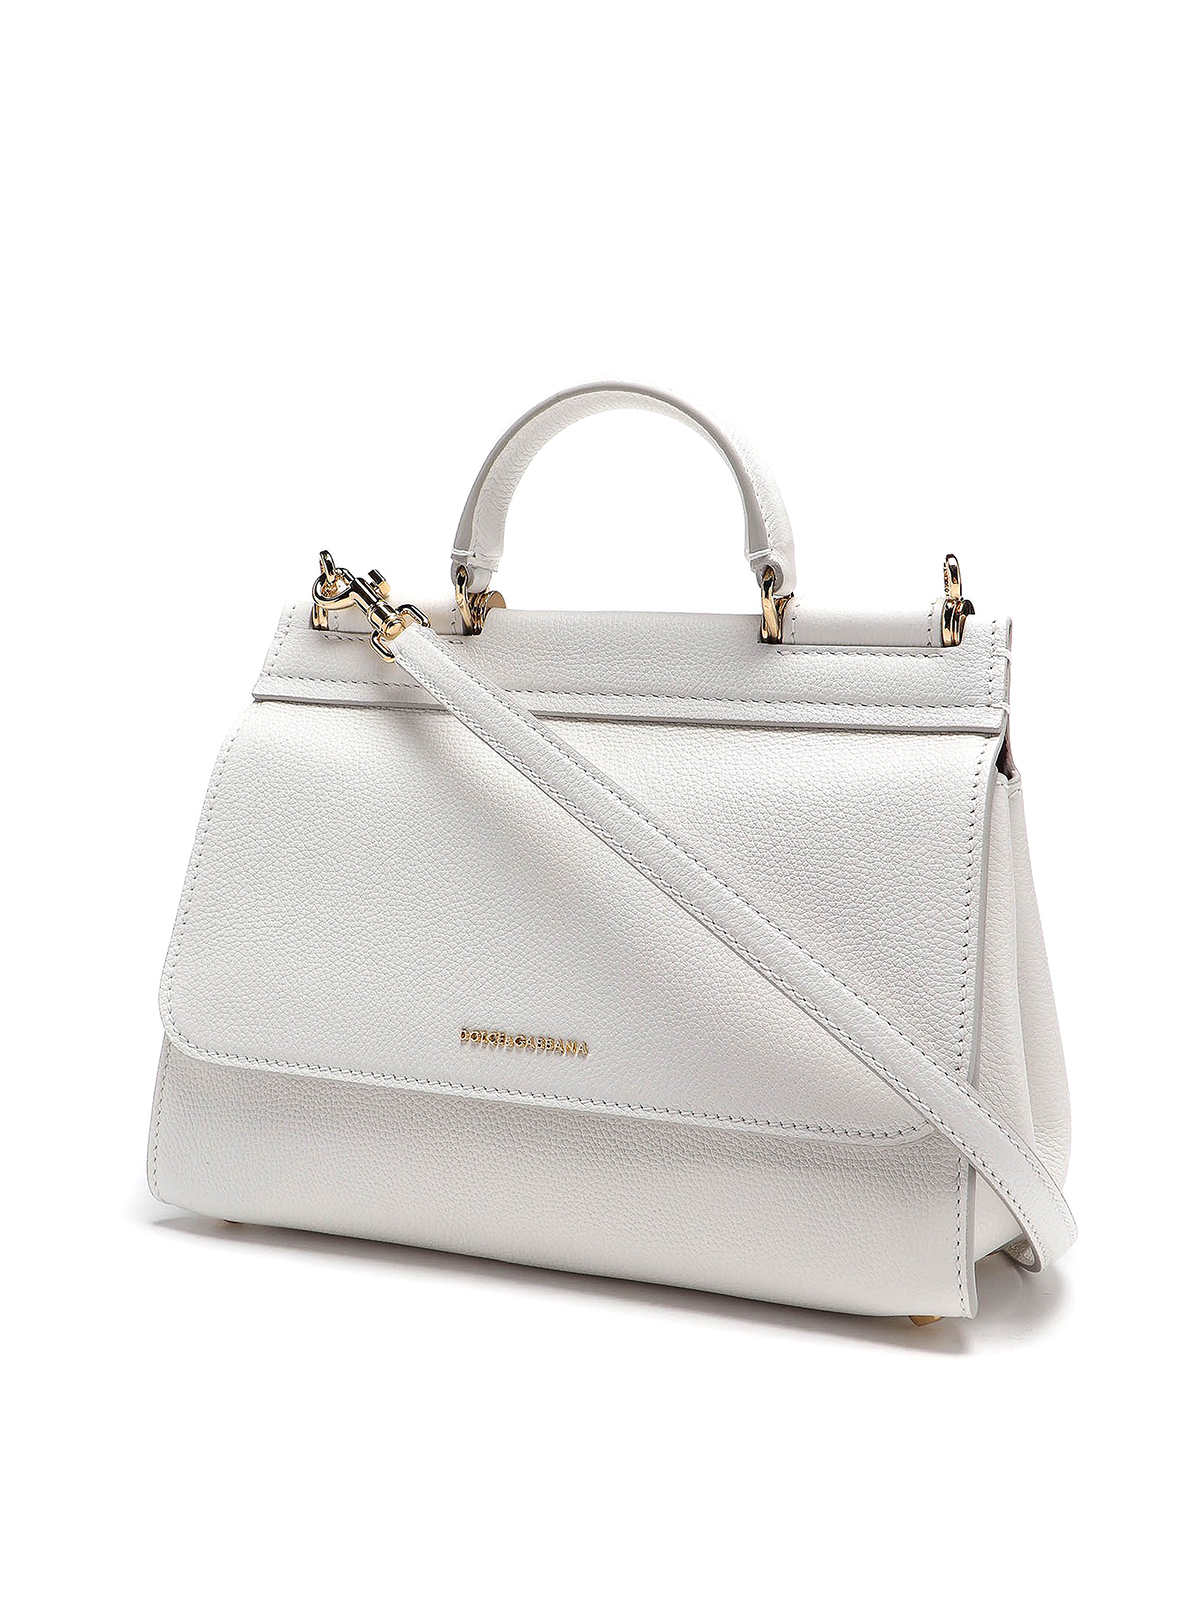 Dolce & Gabbana Dolce E Gabbana Small Sicily Bag In Soft Leather in White